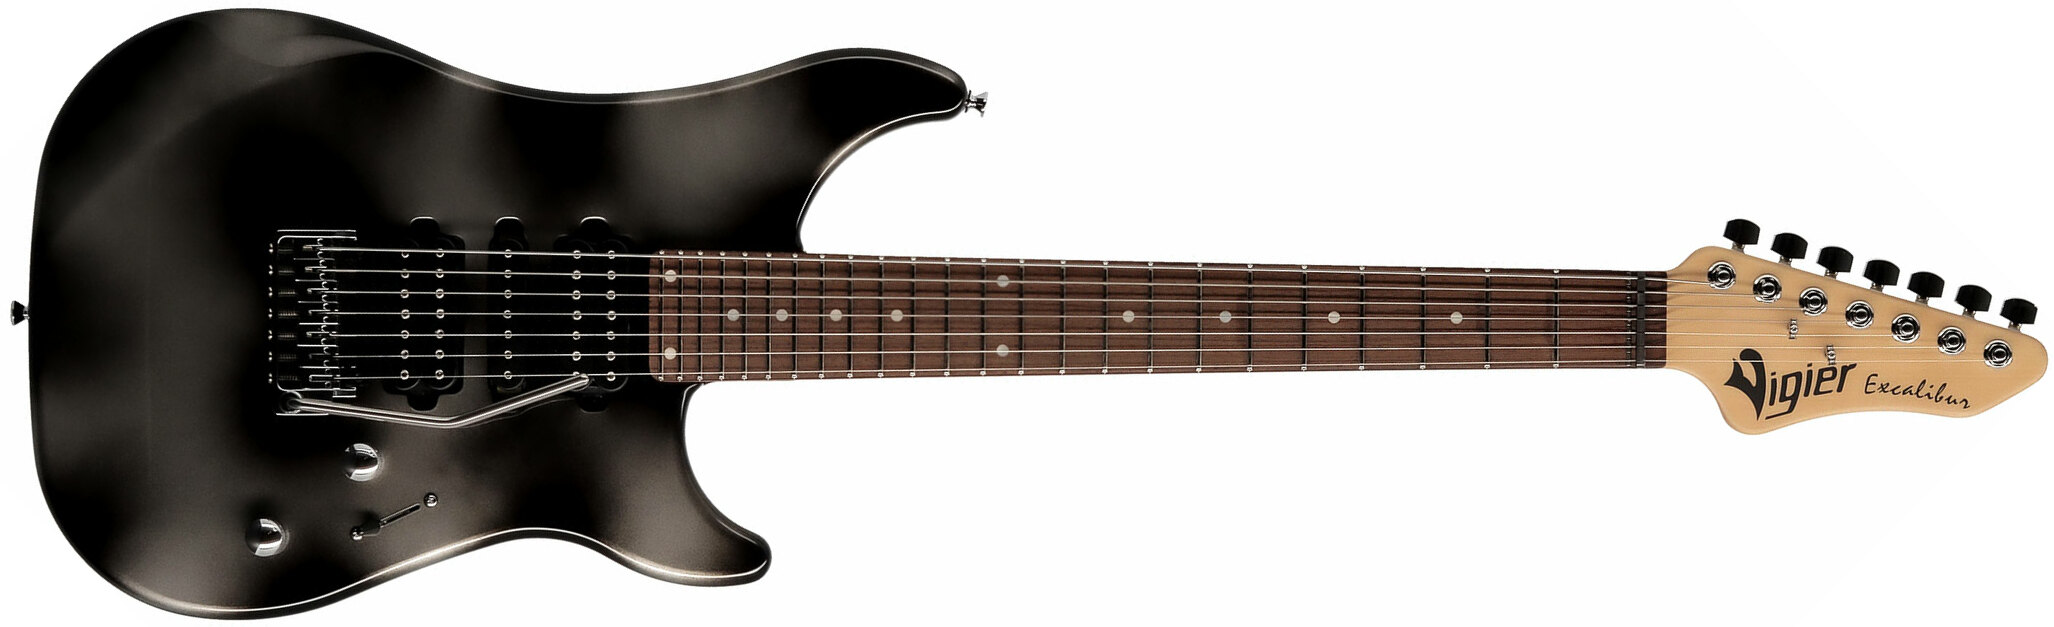 Vigier Excalibur Supra 7c Hsh Trem Rw - Urban Metal - 7 string electric guitar - Main picture